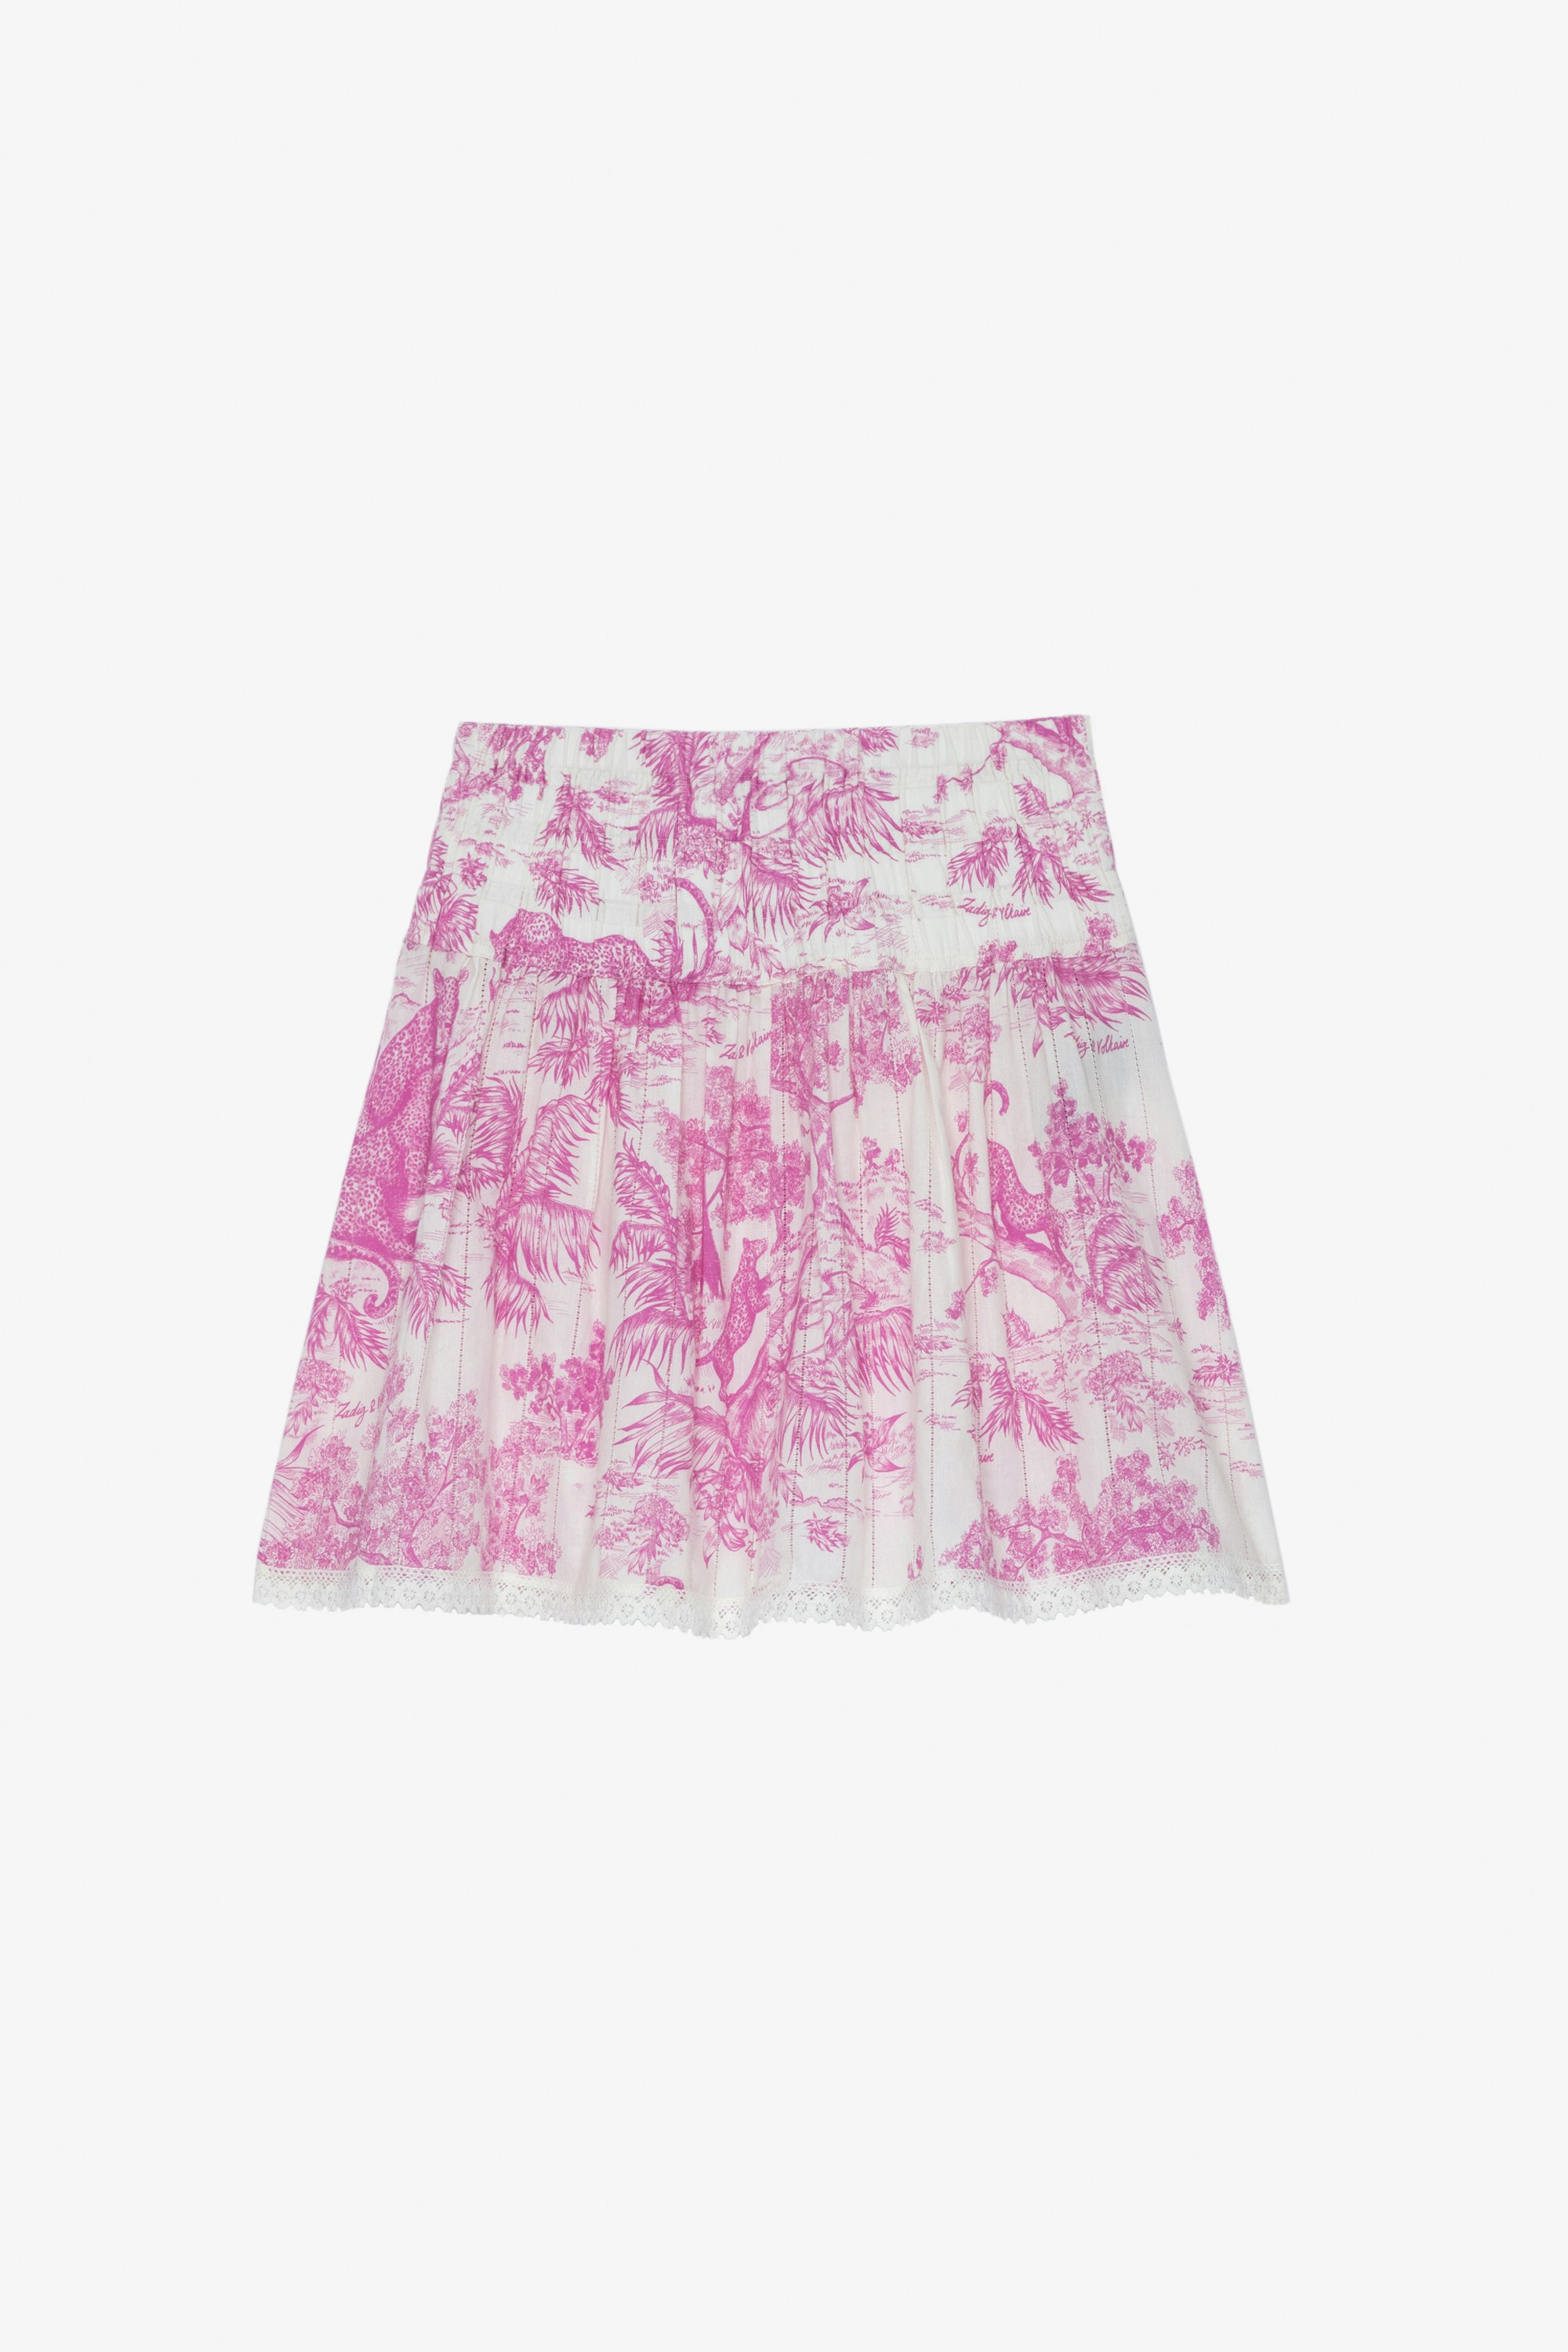 Jocky Skirt Women's short skirt in pink Toile-de-Jouy cotton, gathered